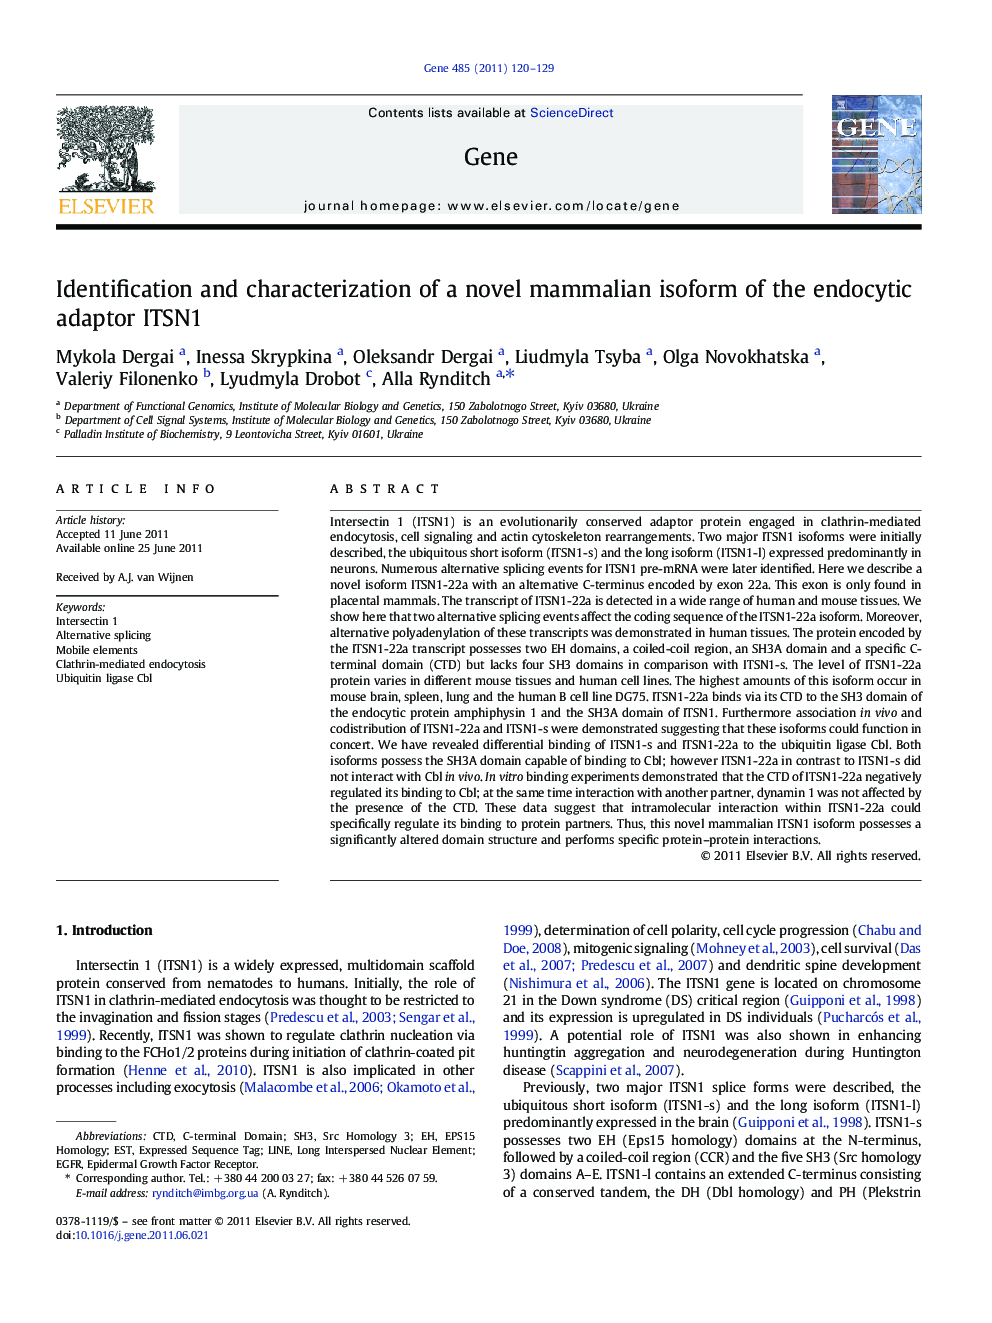 Identification and characterization of a novel mammalian isoform of the endocytic adaptor ITSN1